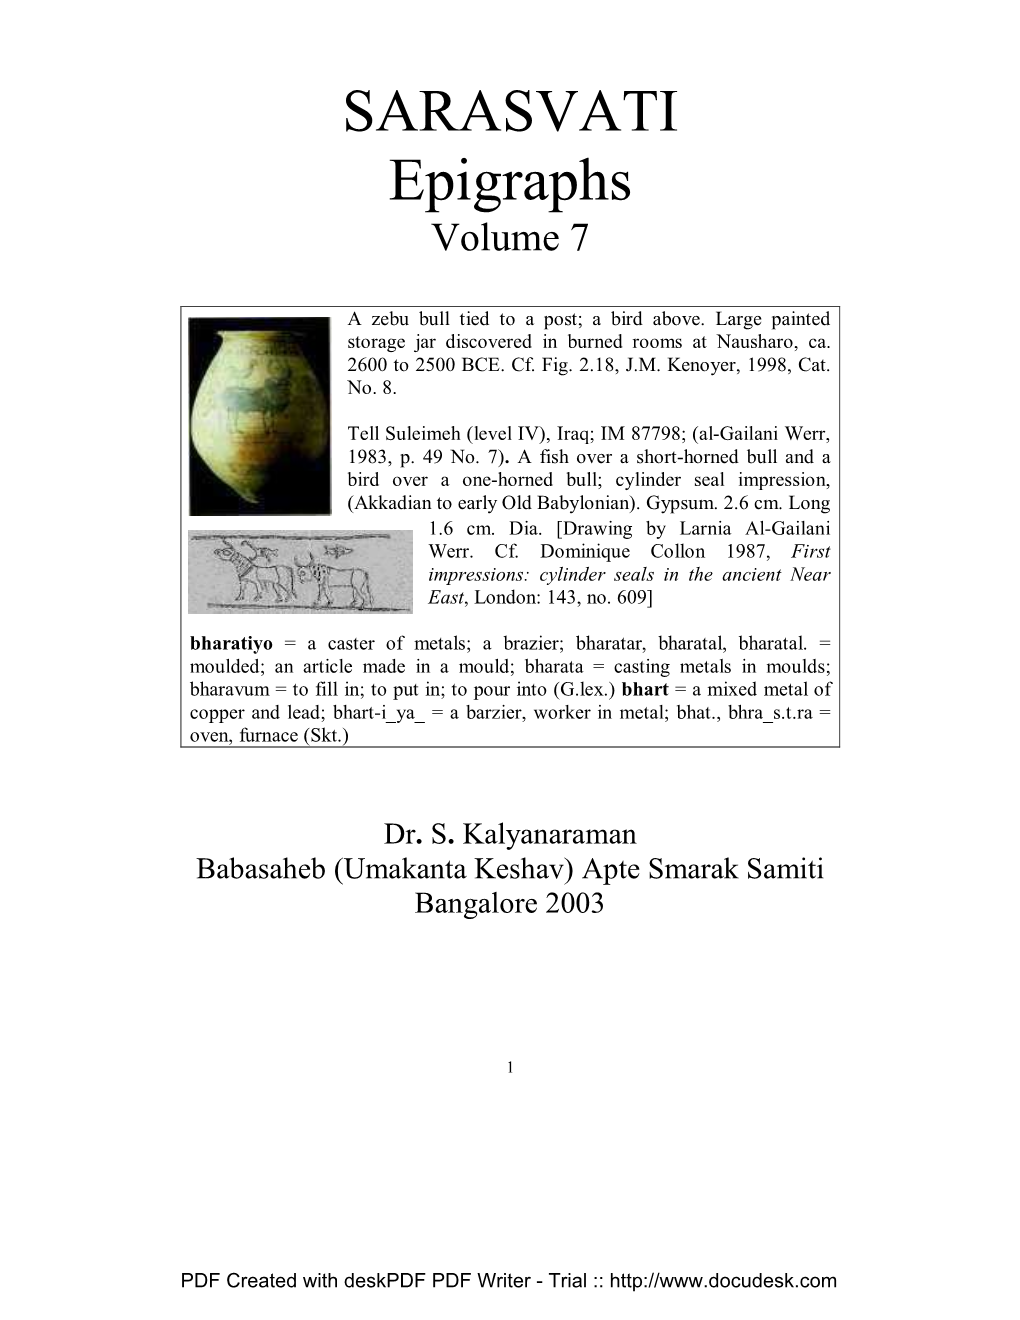 SARASVATI Epigraphs Volume 7